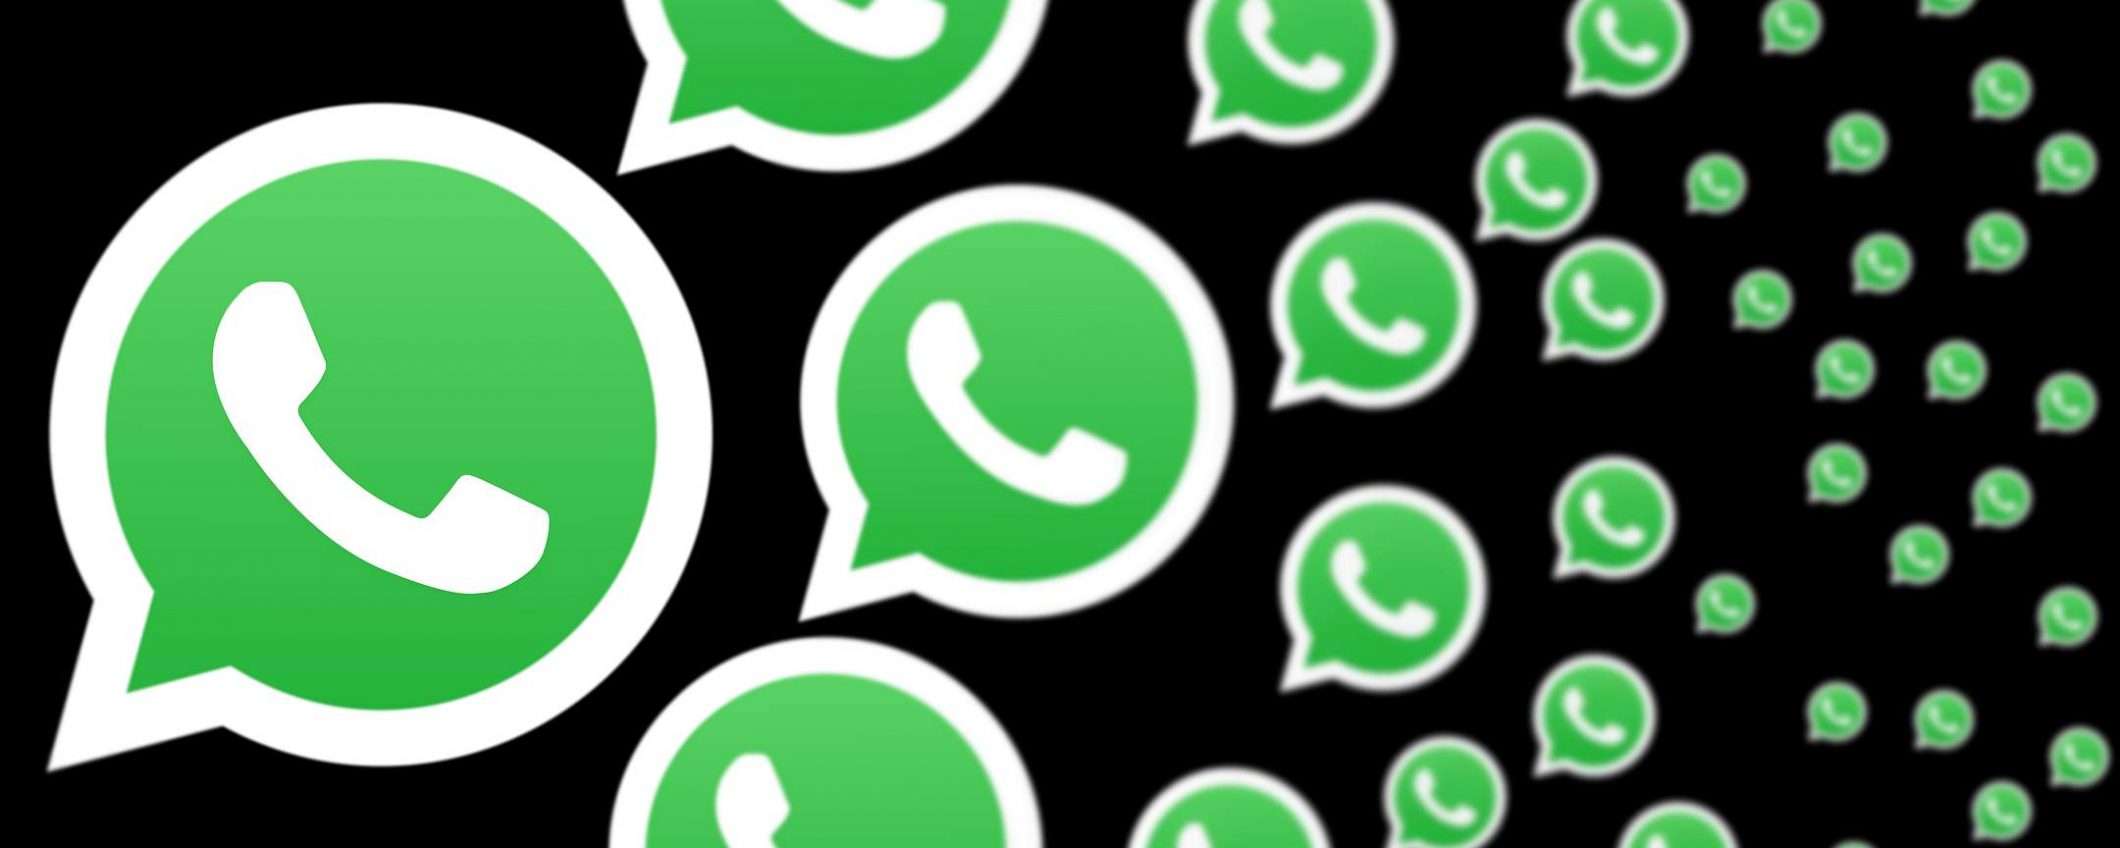 WhatsApp: se è meno virale, è più sicuro